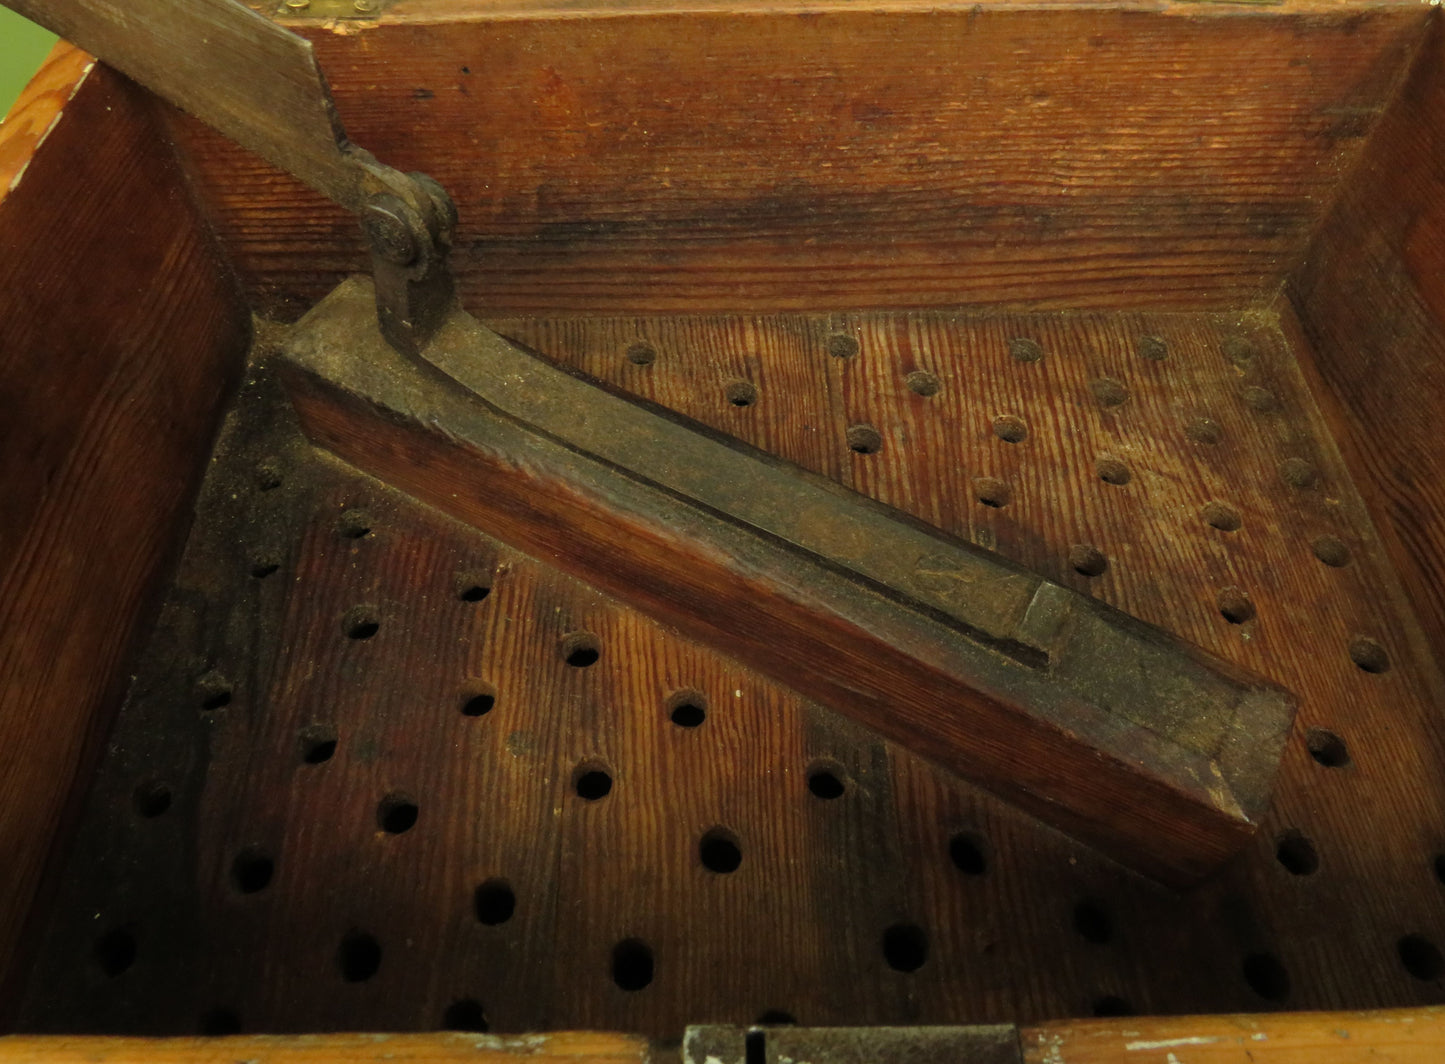 Antique Swedish Sugar Cutting Box with Internal Cutter